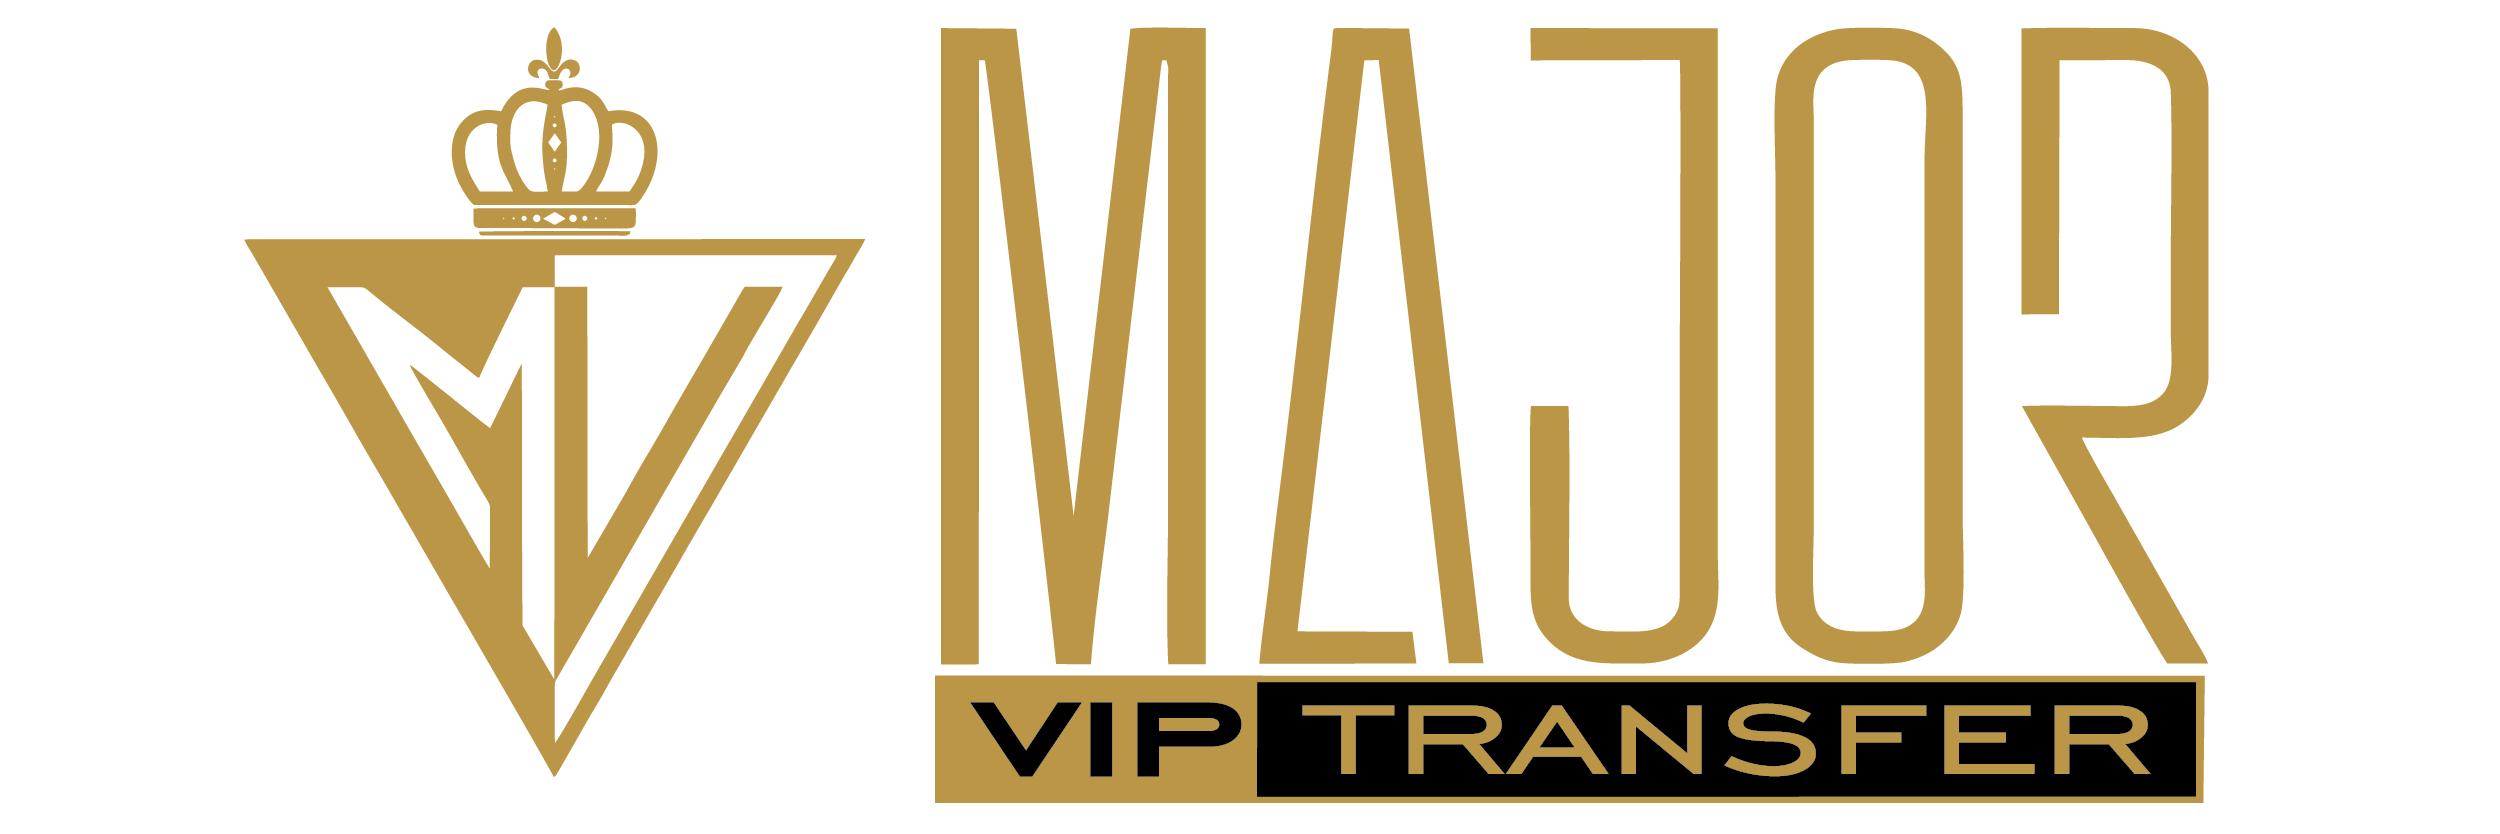 Major Vip Transfer